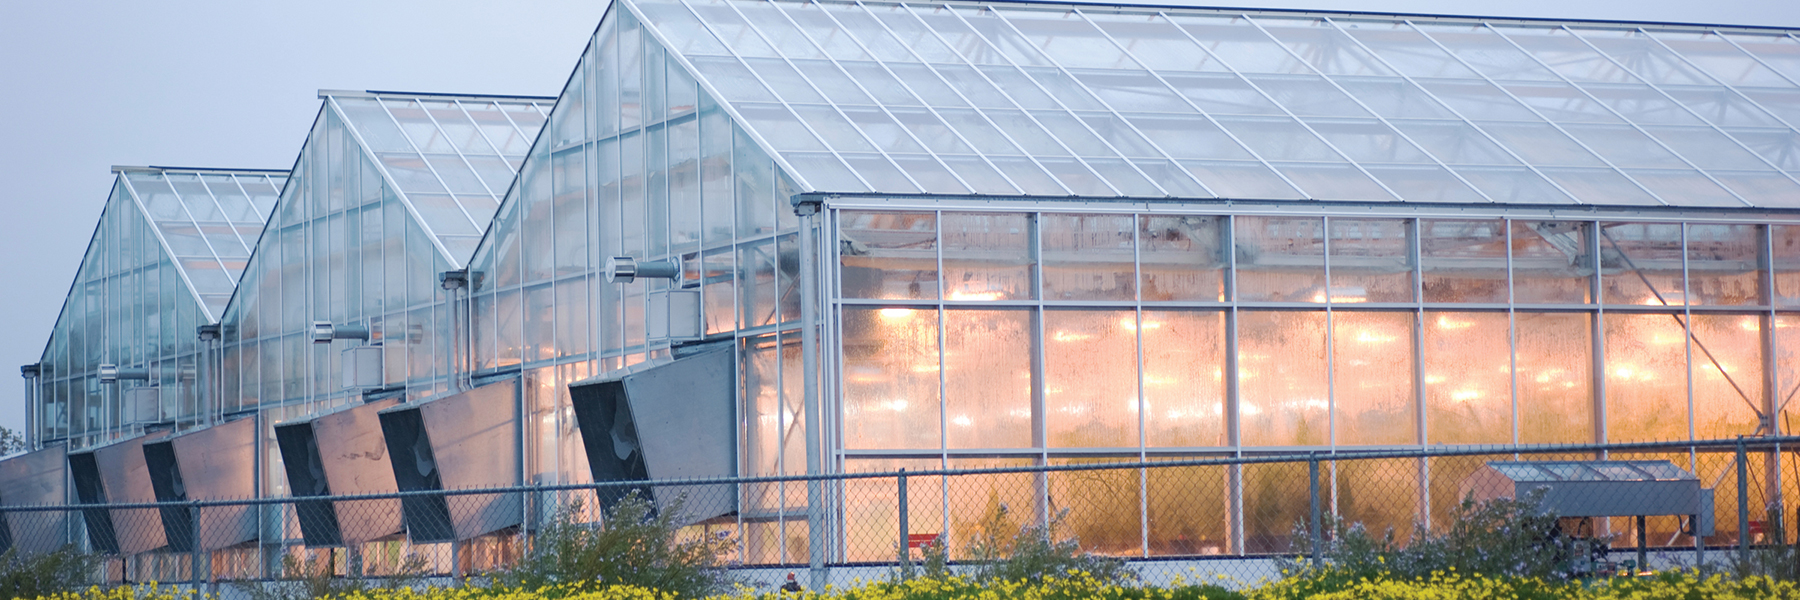 Educational greenhouse exterior